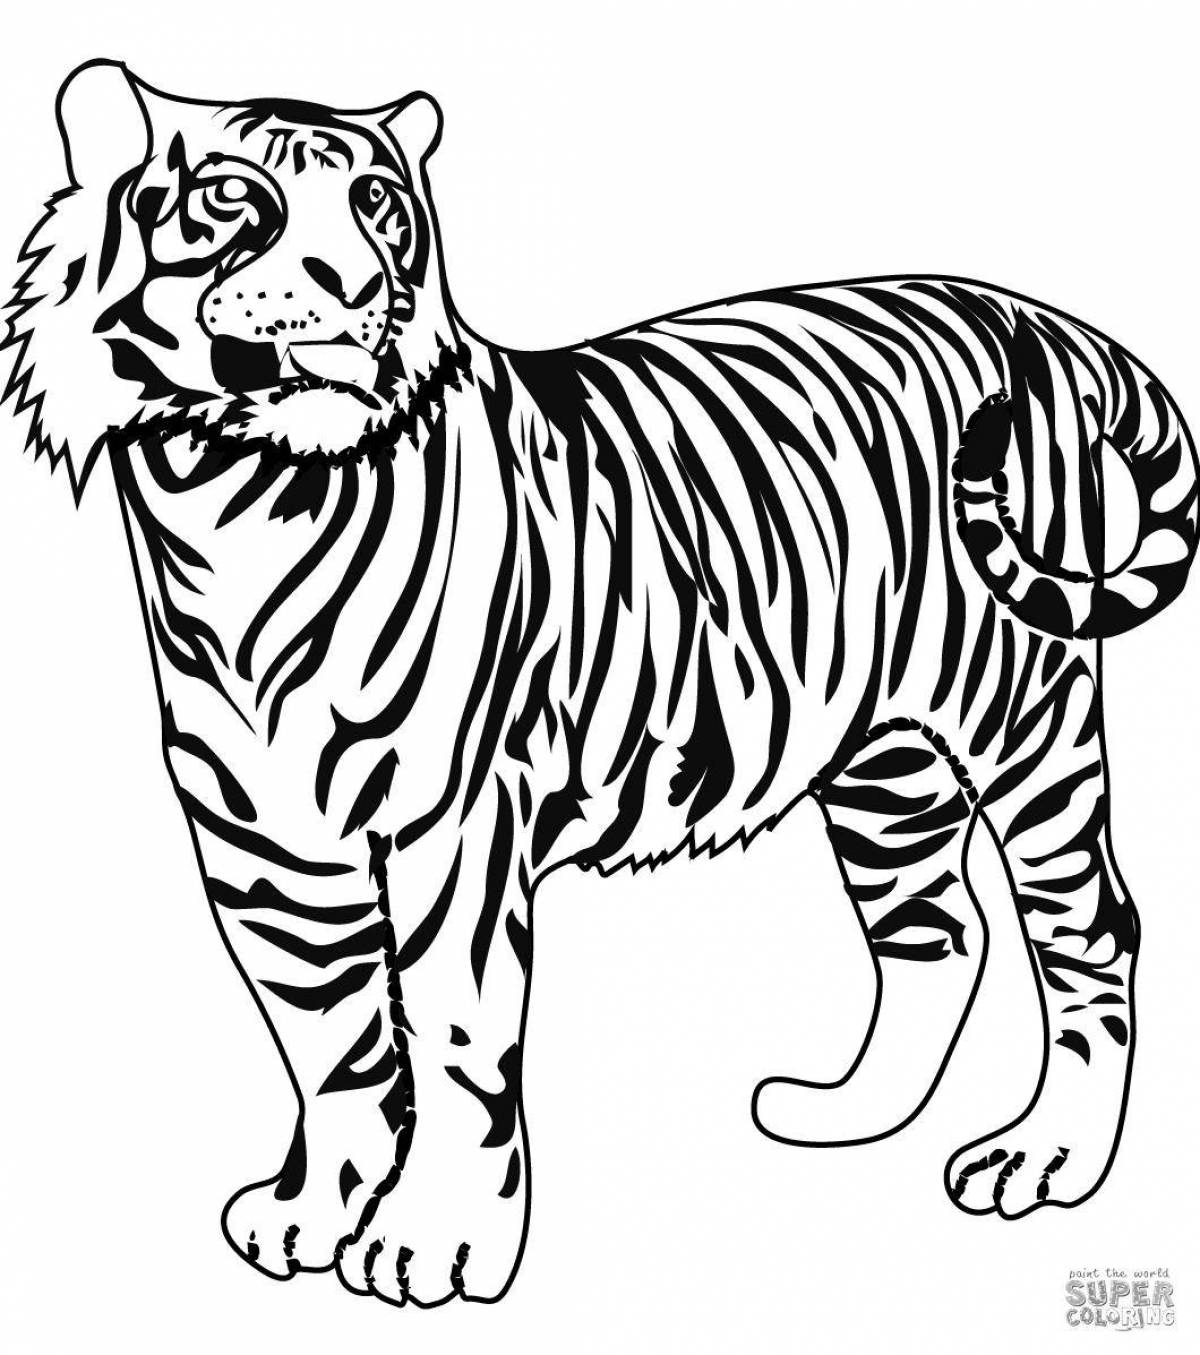 Violent coloring tiger for children 6-7 years old